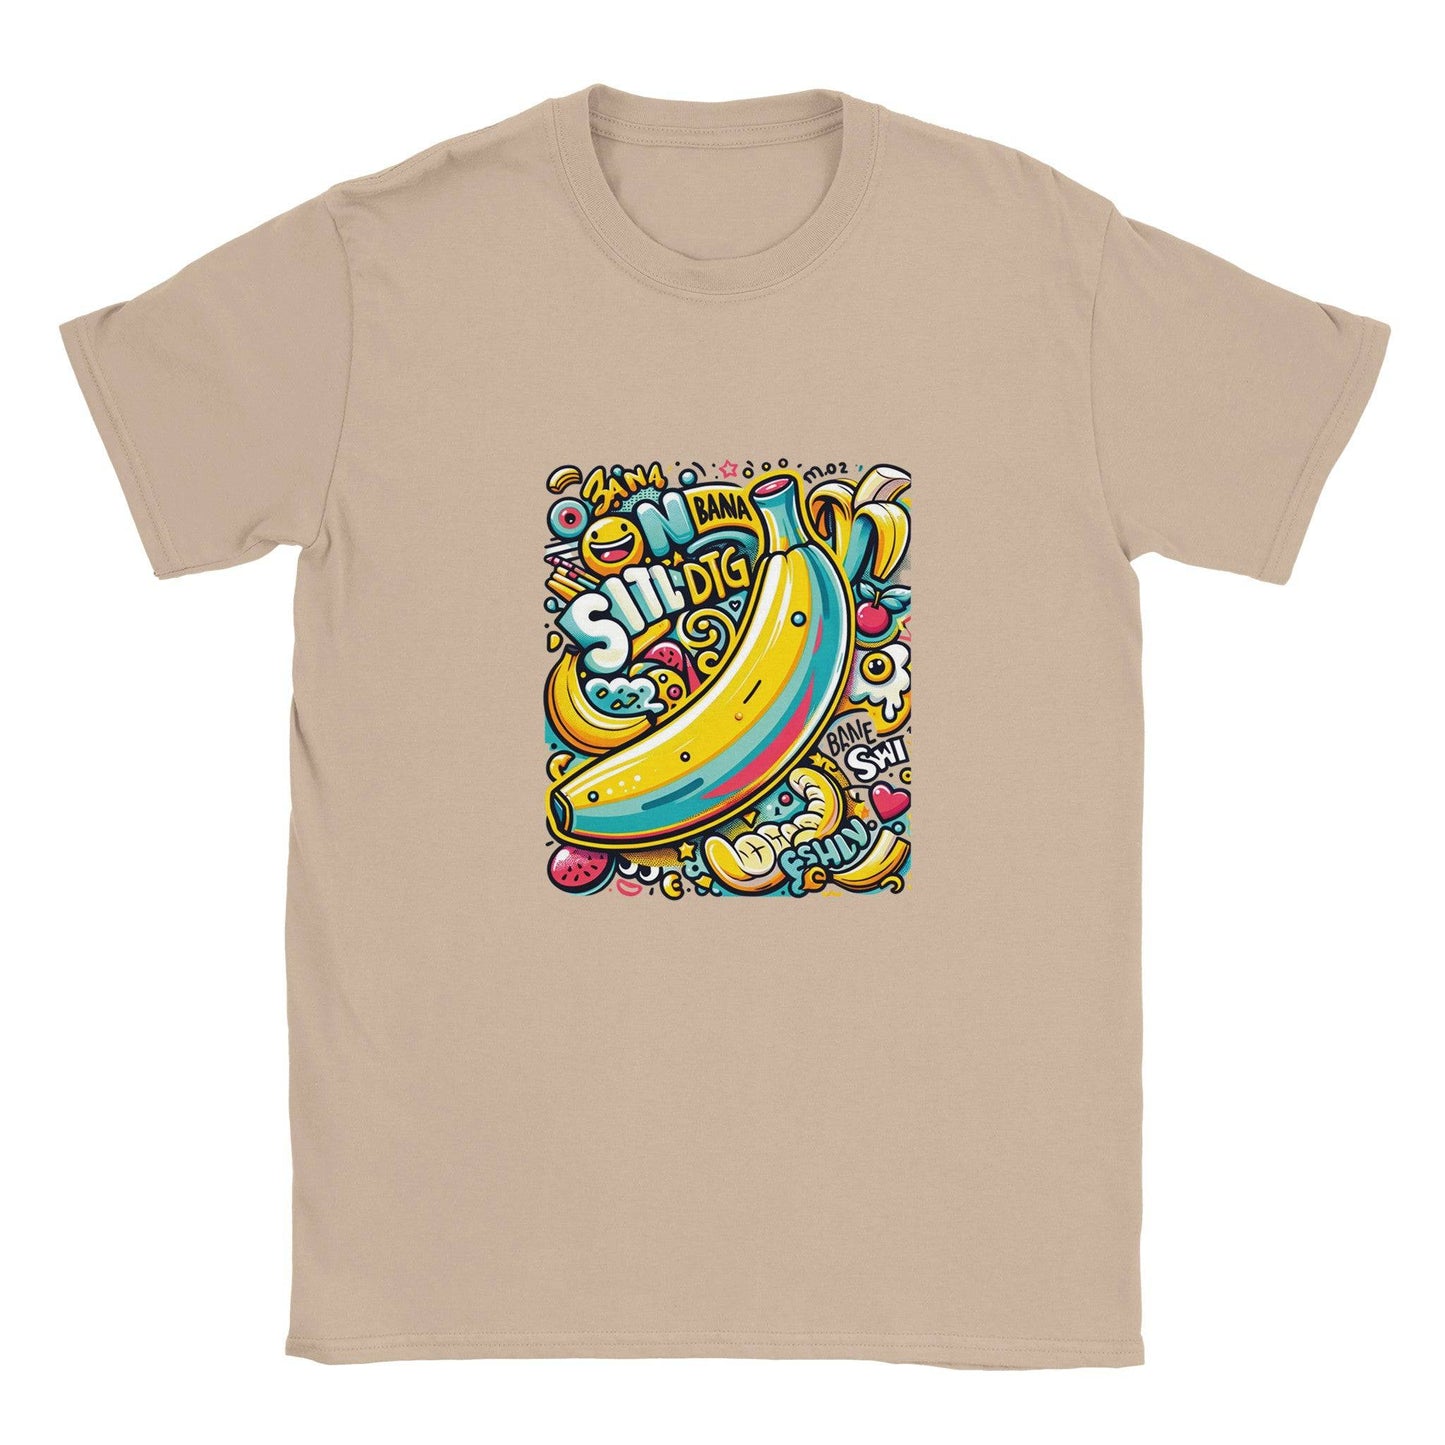 Classic Yellow banana t-shirt 100% breathable cotton - BeinCart